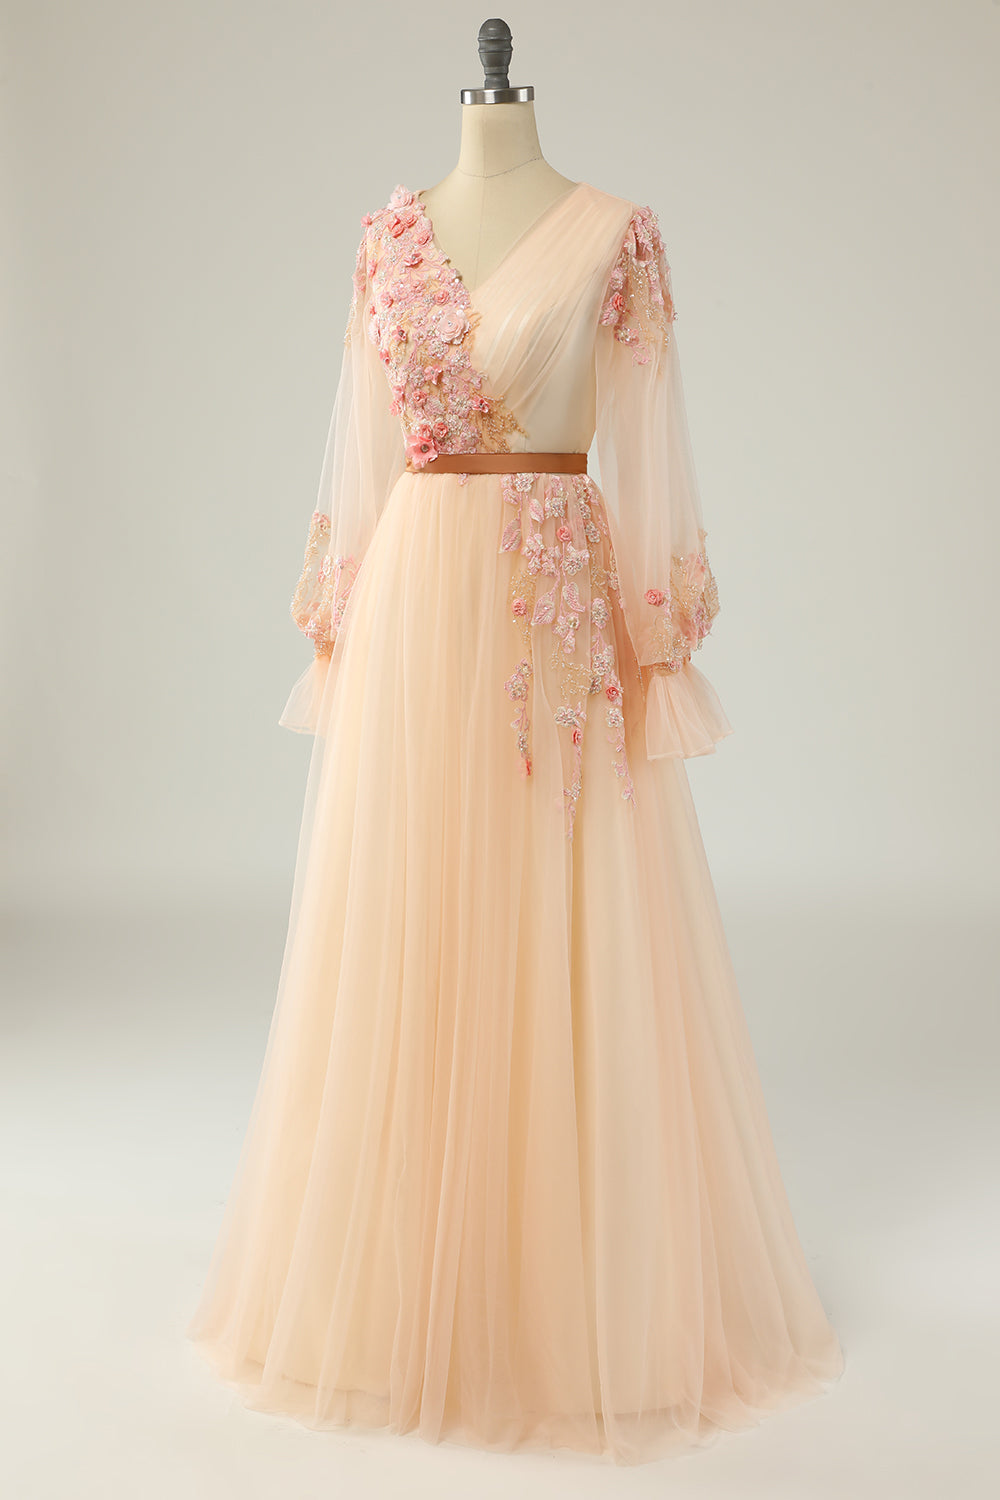 Elegant A Line V Neck Apricot Long Prom Dress with Appliques